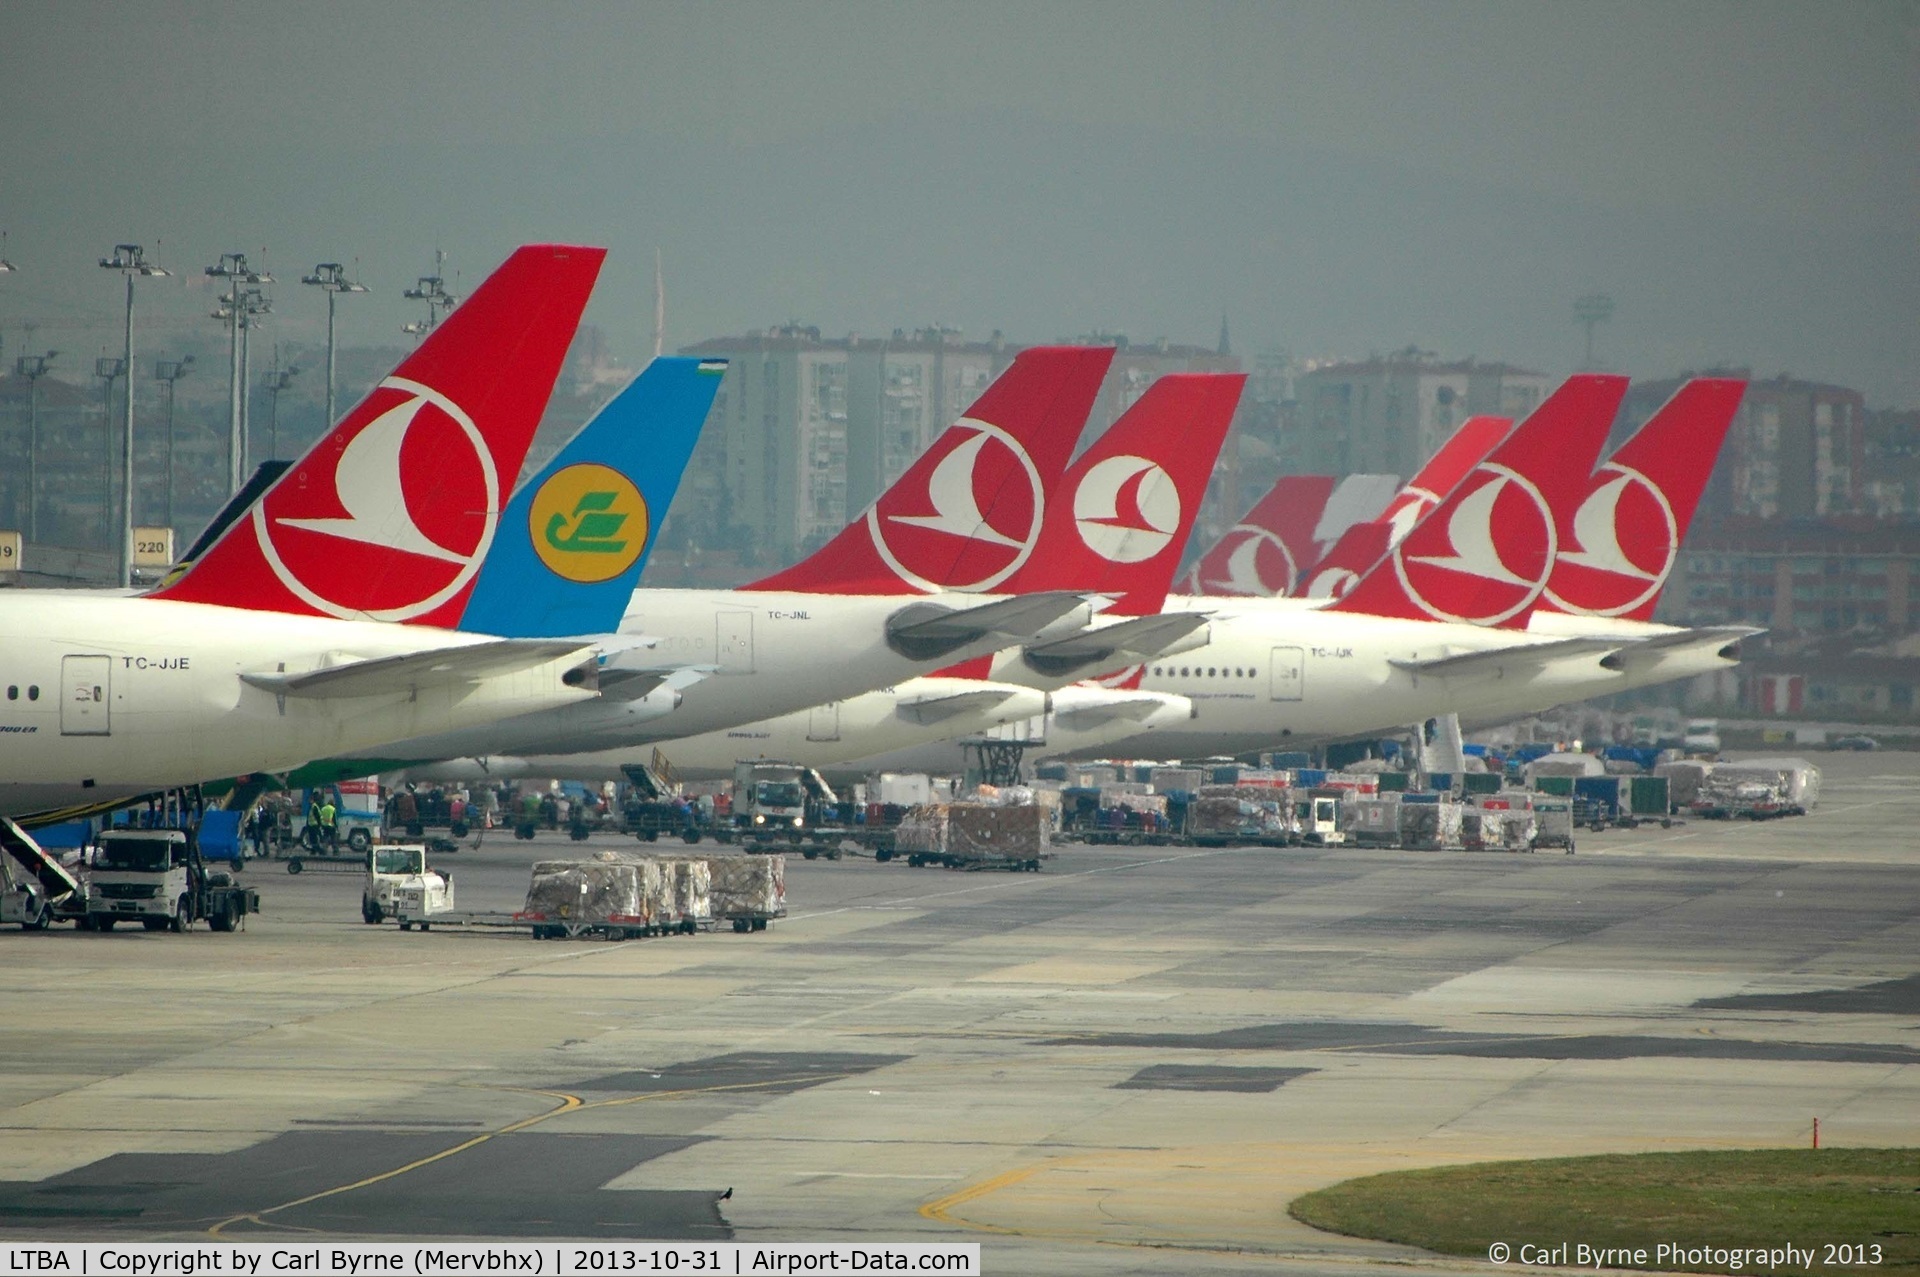 Istanbul Atatürk International Airport, Istanbul Turkey (LTBA) - Taken from the Fly Inn Shopping Mall.